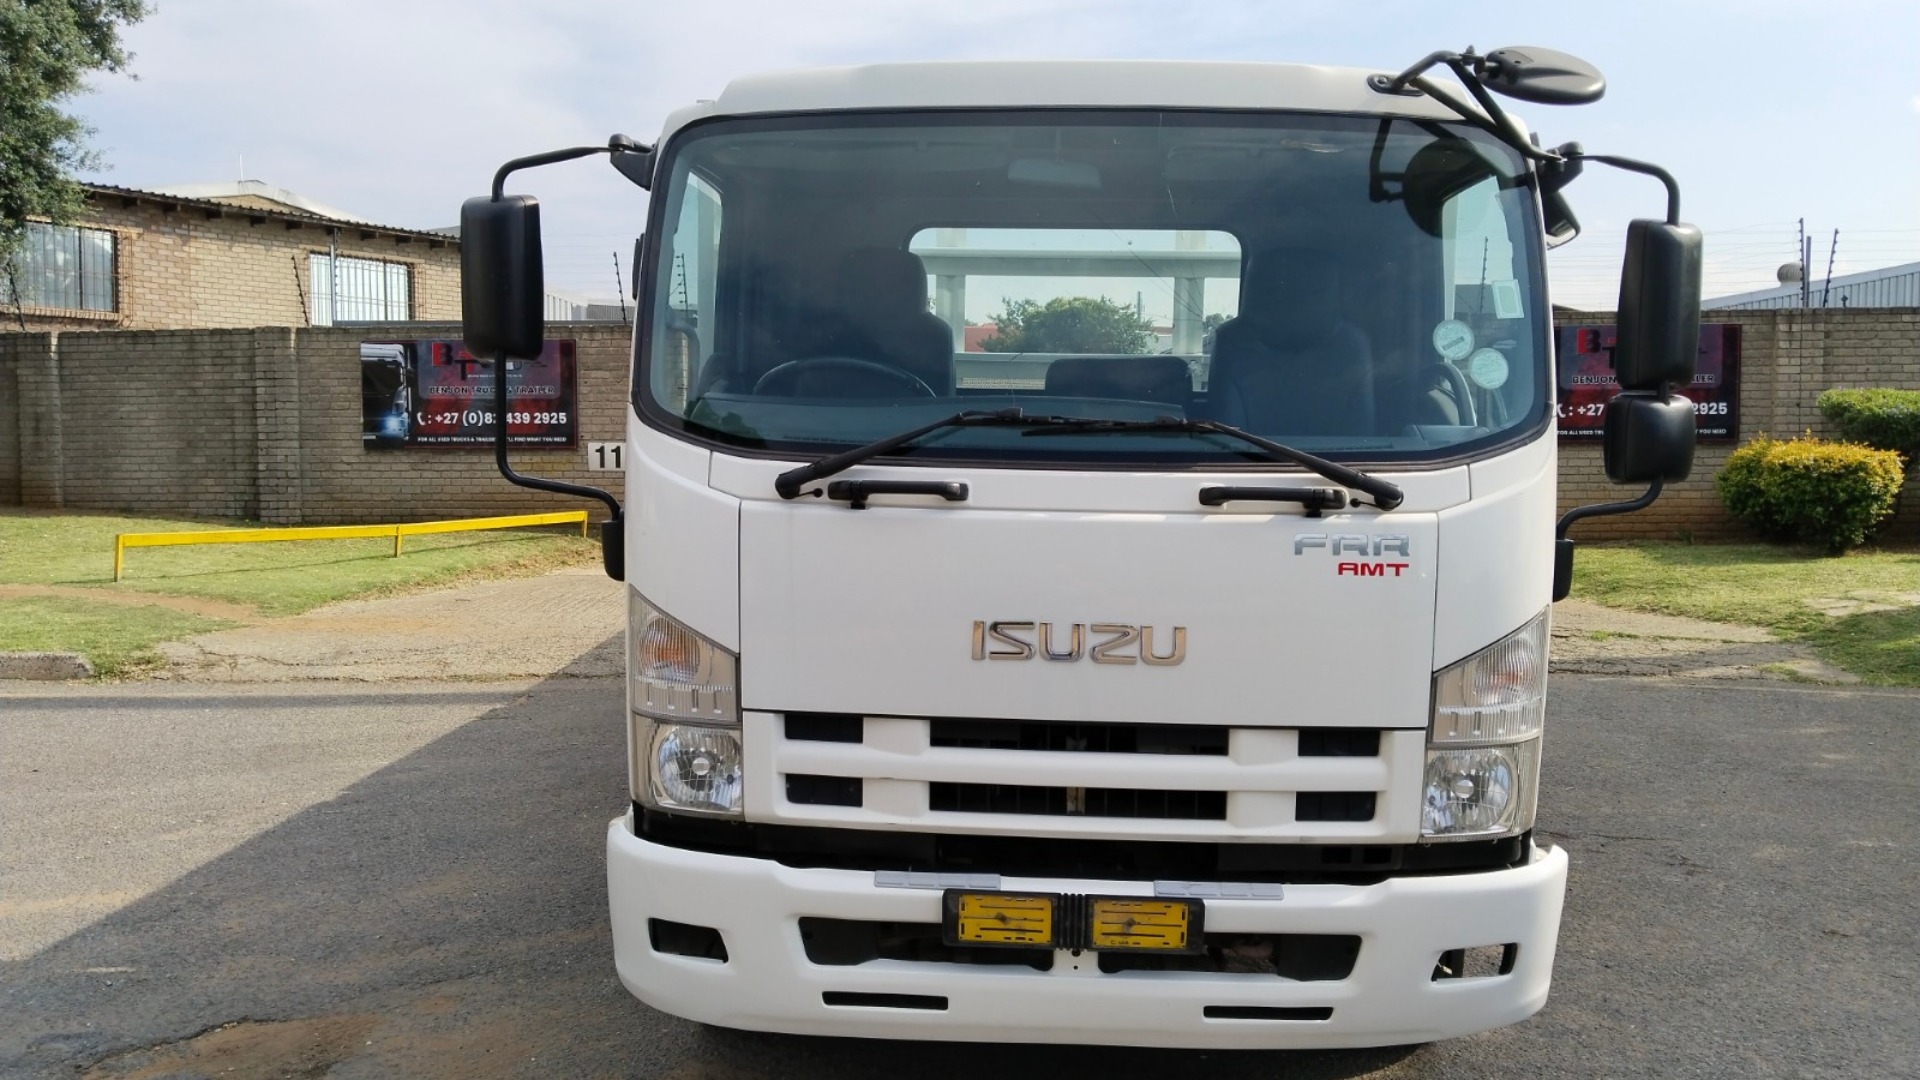 Isuzu Dropside trucks 2016 frr 600 2016 for sale by Benjon Truck and Trailer | Truck & Trailer Marketplace